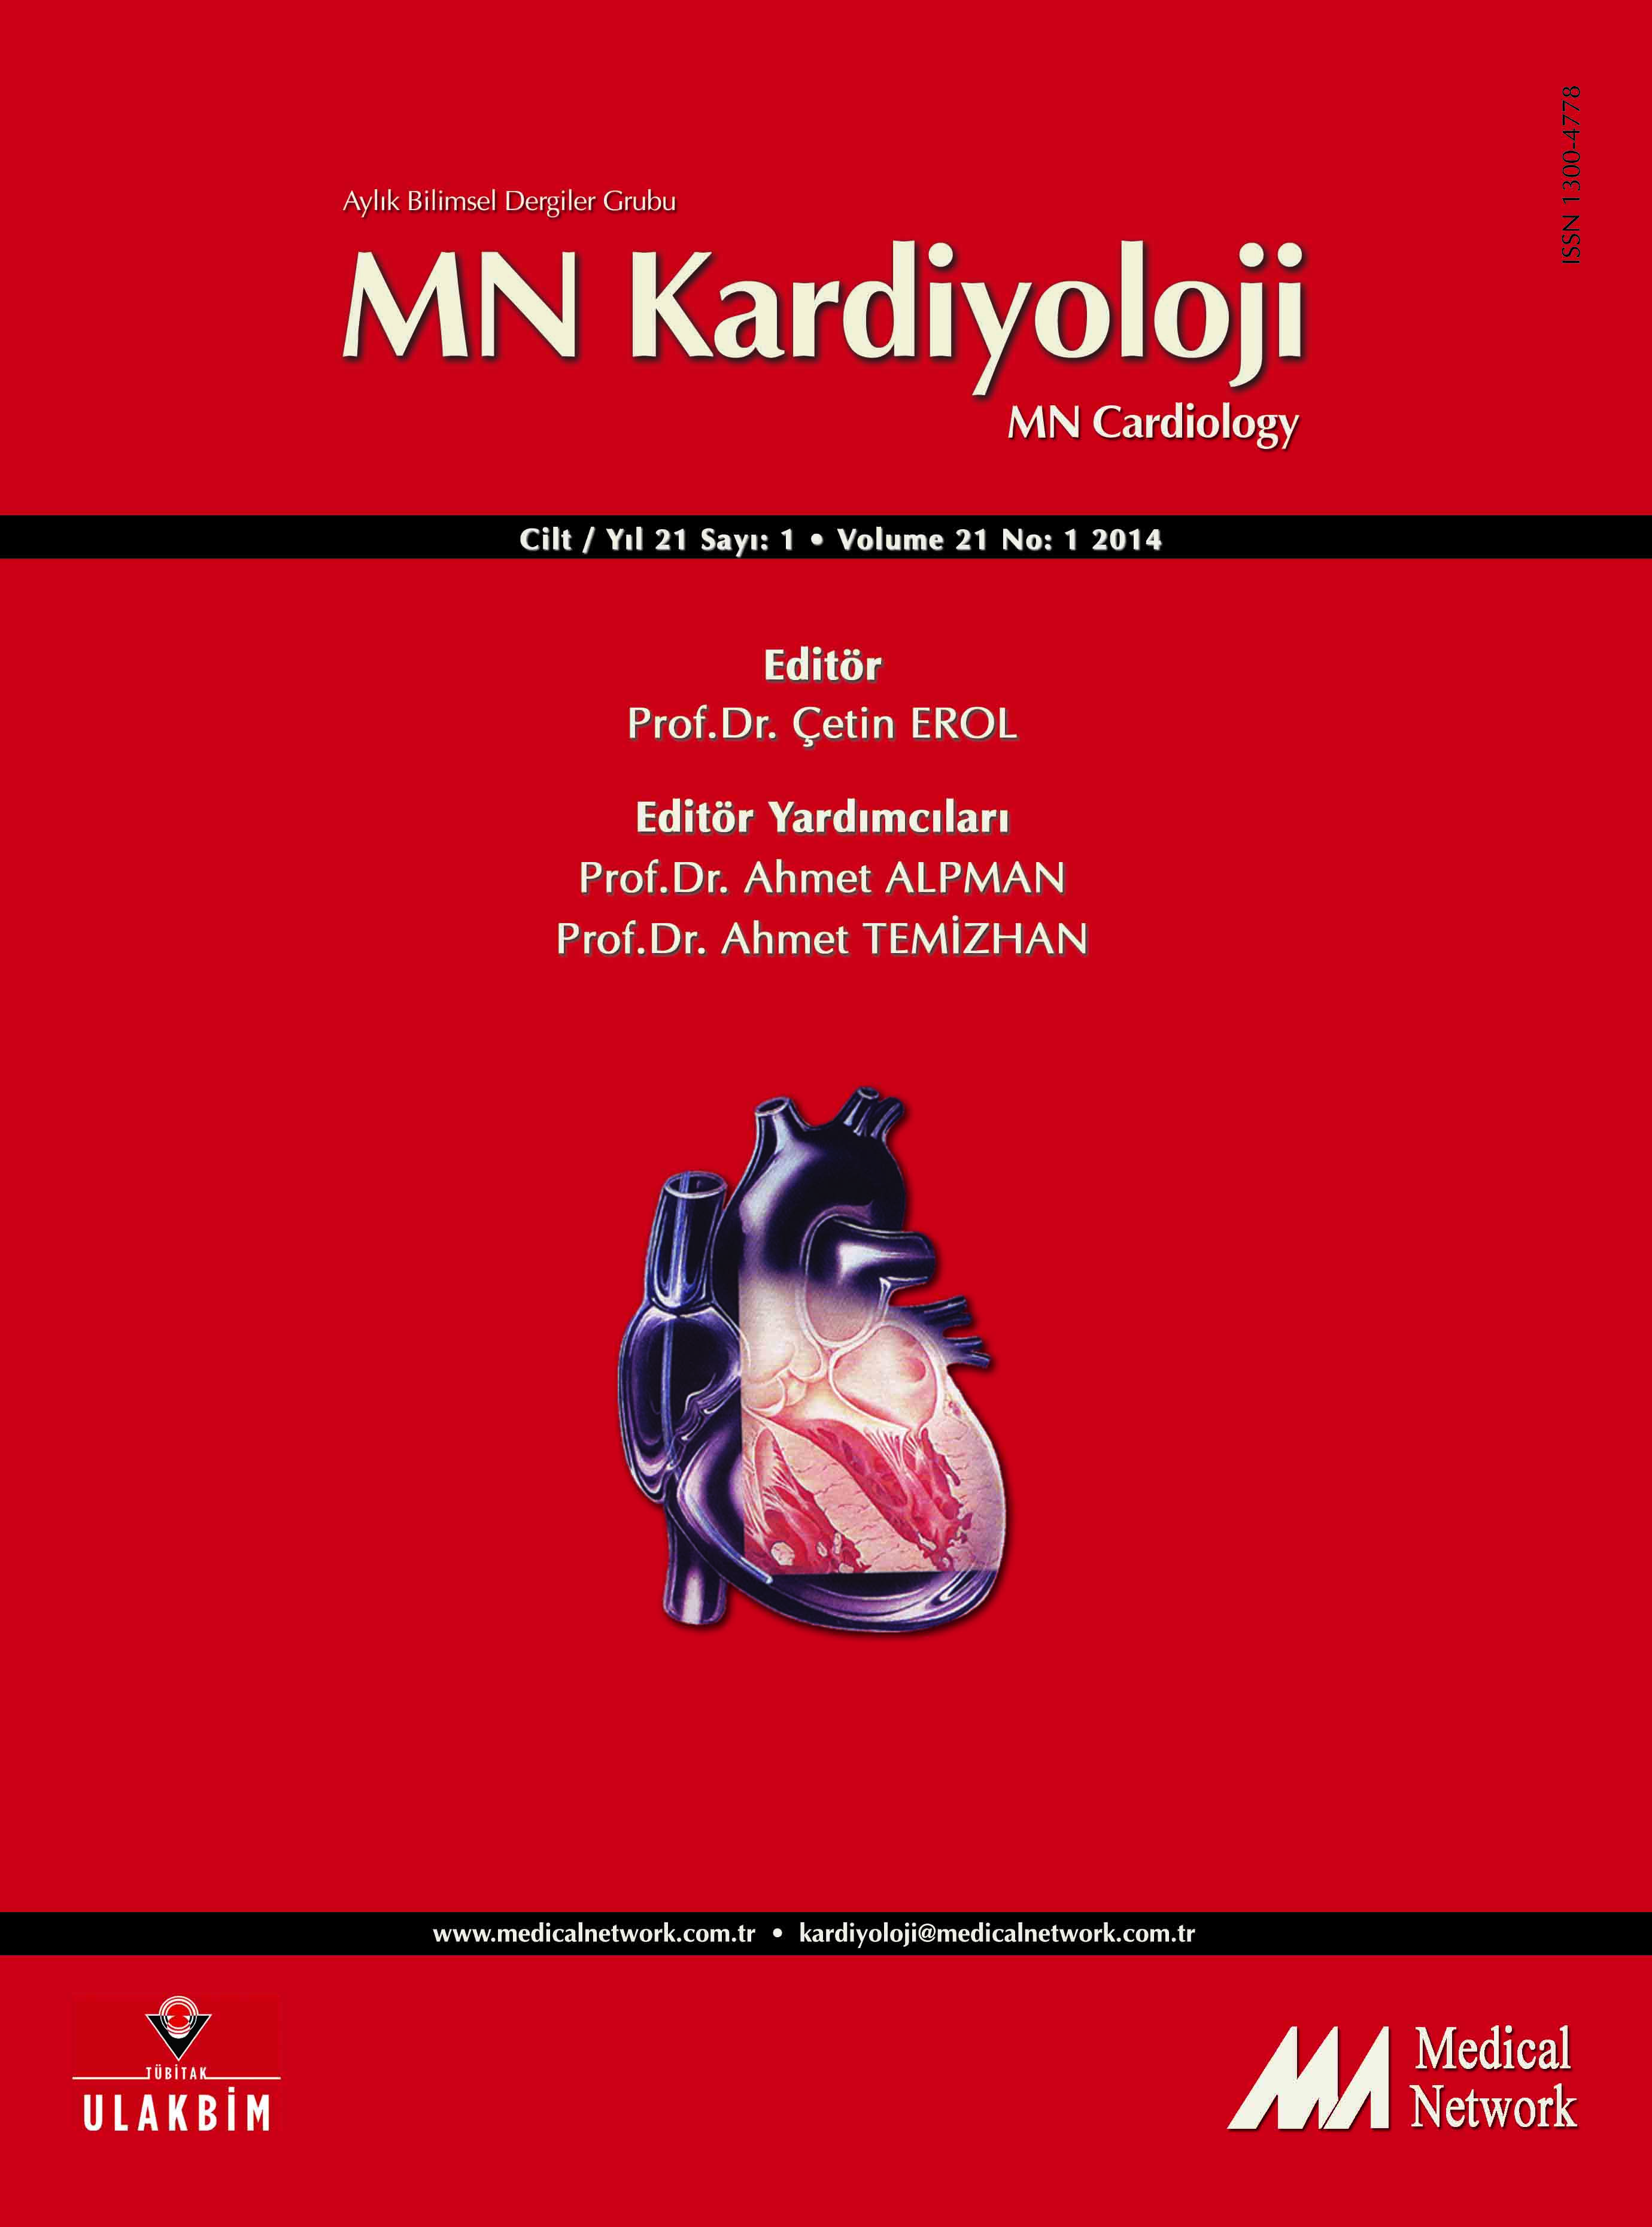 <p>MN Kardiyoloji Cilt: 21 Say: 1 2014 (MN Cardiology Volume: 21 No: 1 2014)</p>